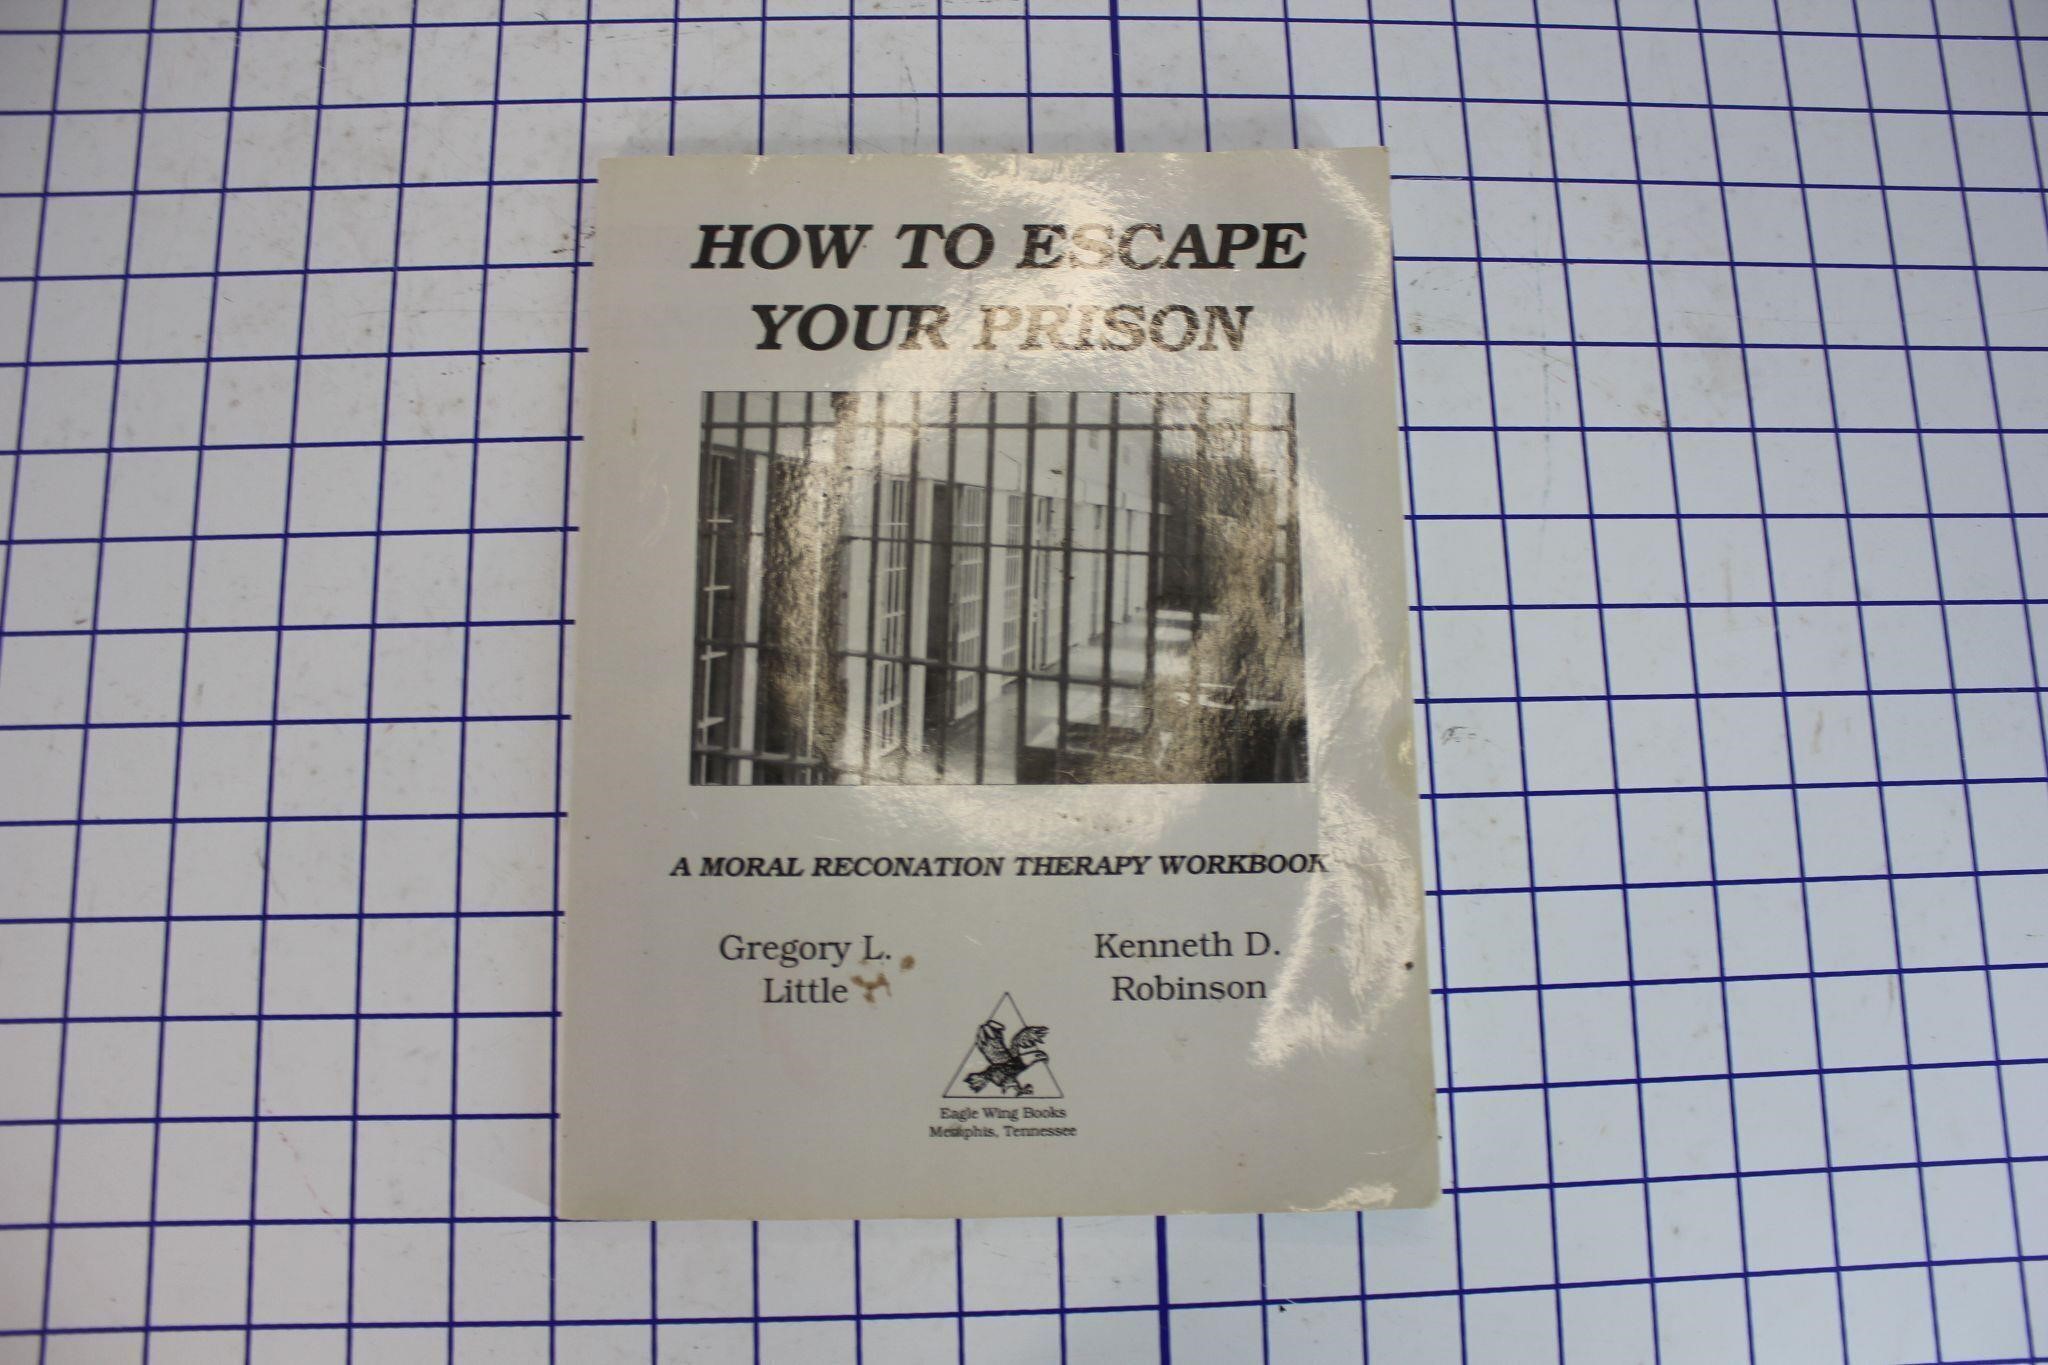 “HOW TO ESCAPE YOUR PRISON”  BOOK